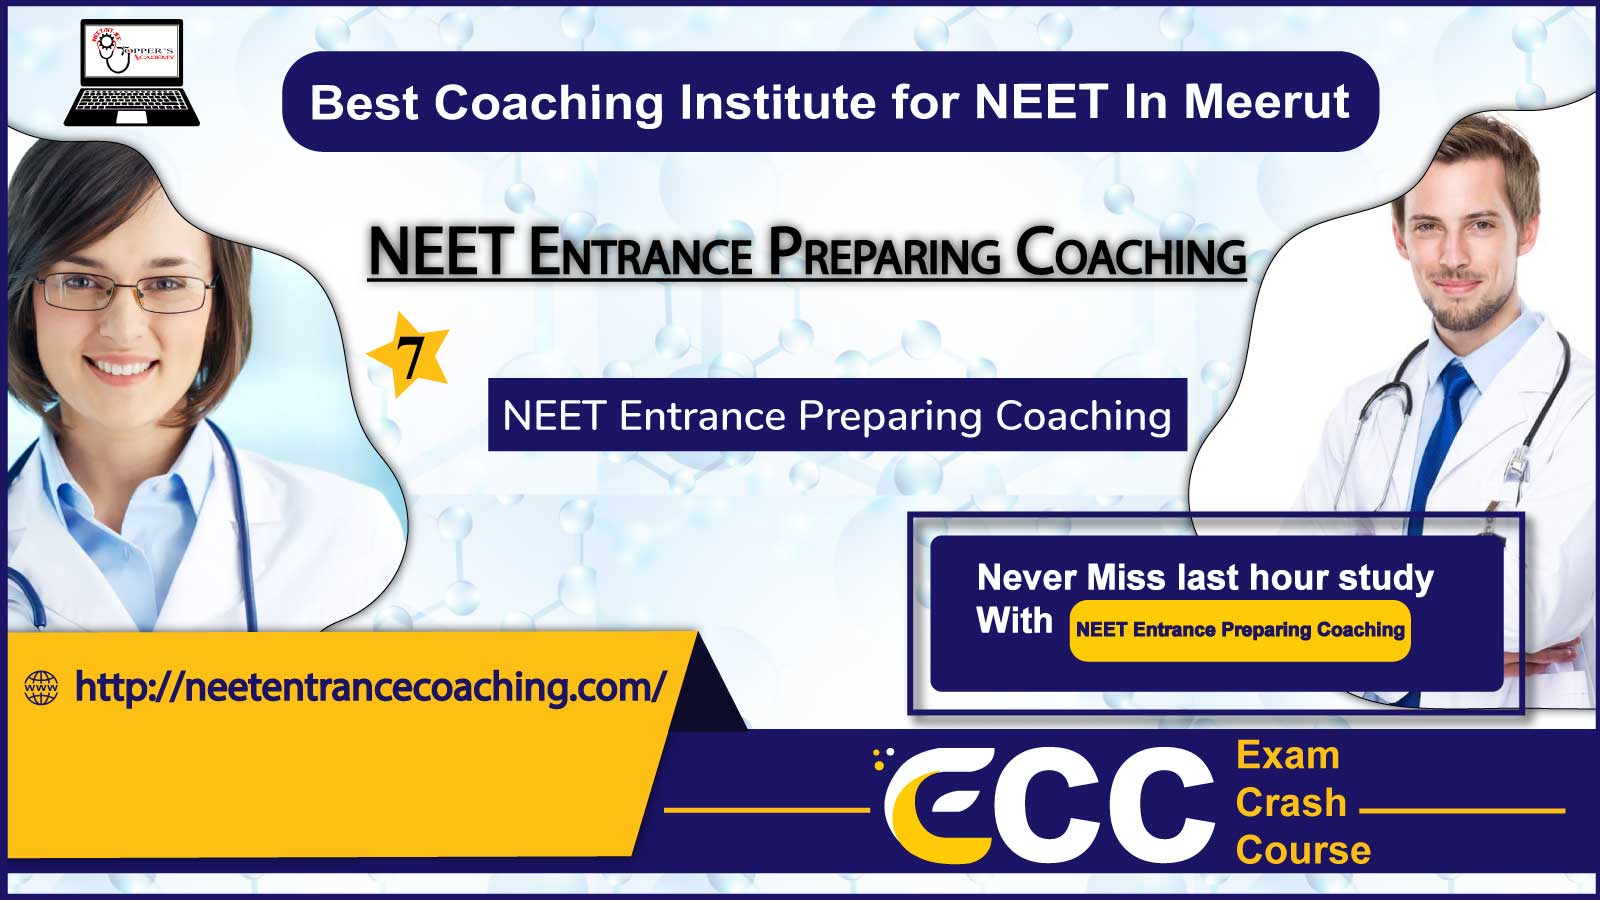 NEET Entrance Preparing Coaching Centre in Meerut